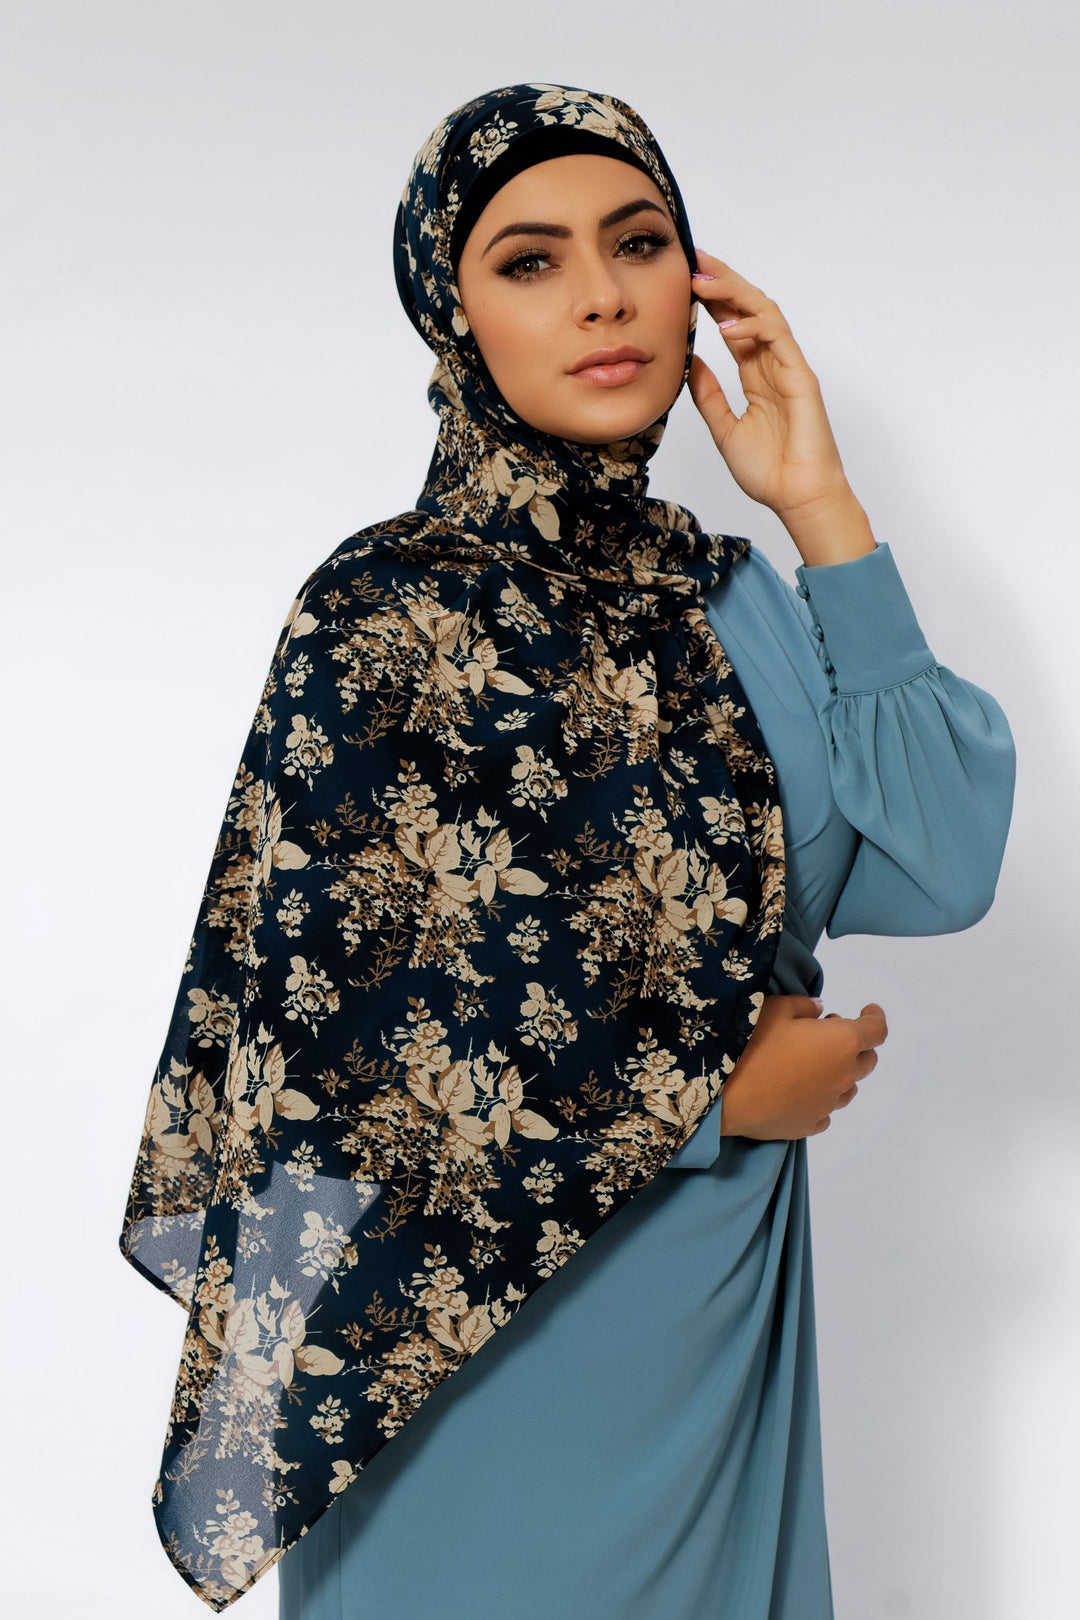 Urban Modesty - Teal and Beige Print Floral Chiffon Hijab